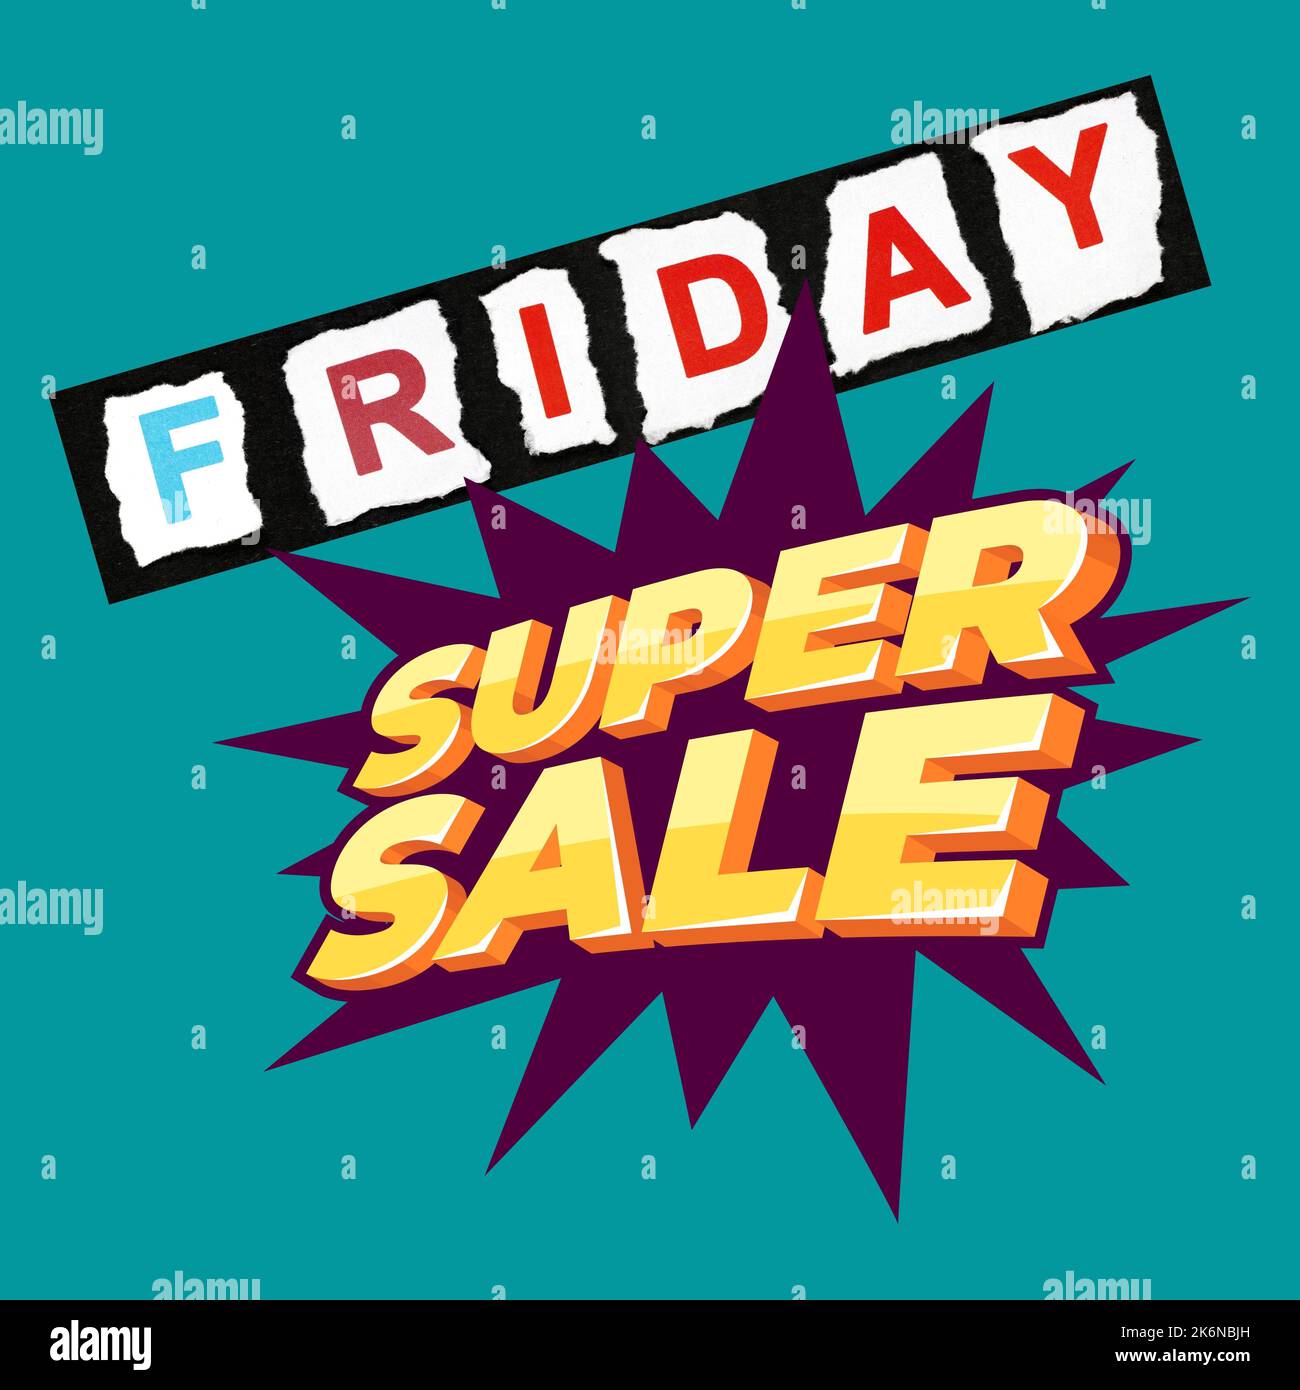 Friday sales background Stock Photo